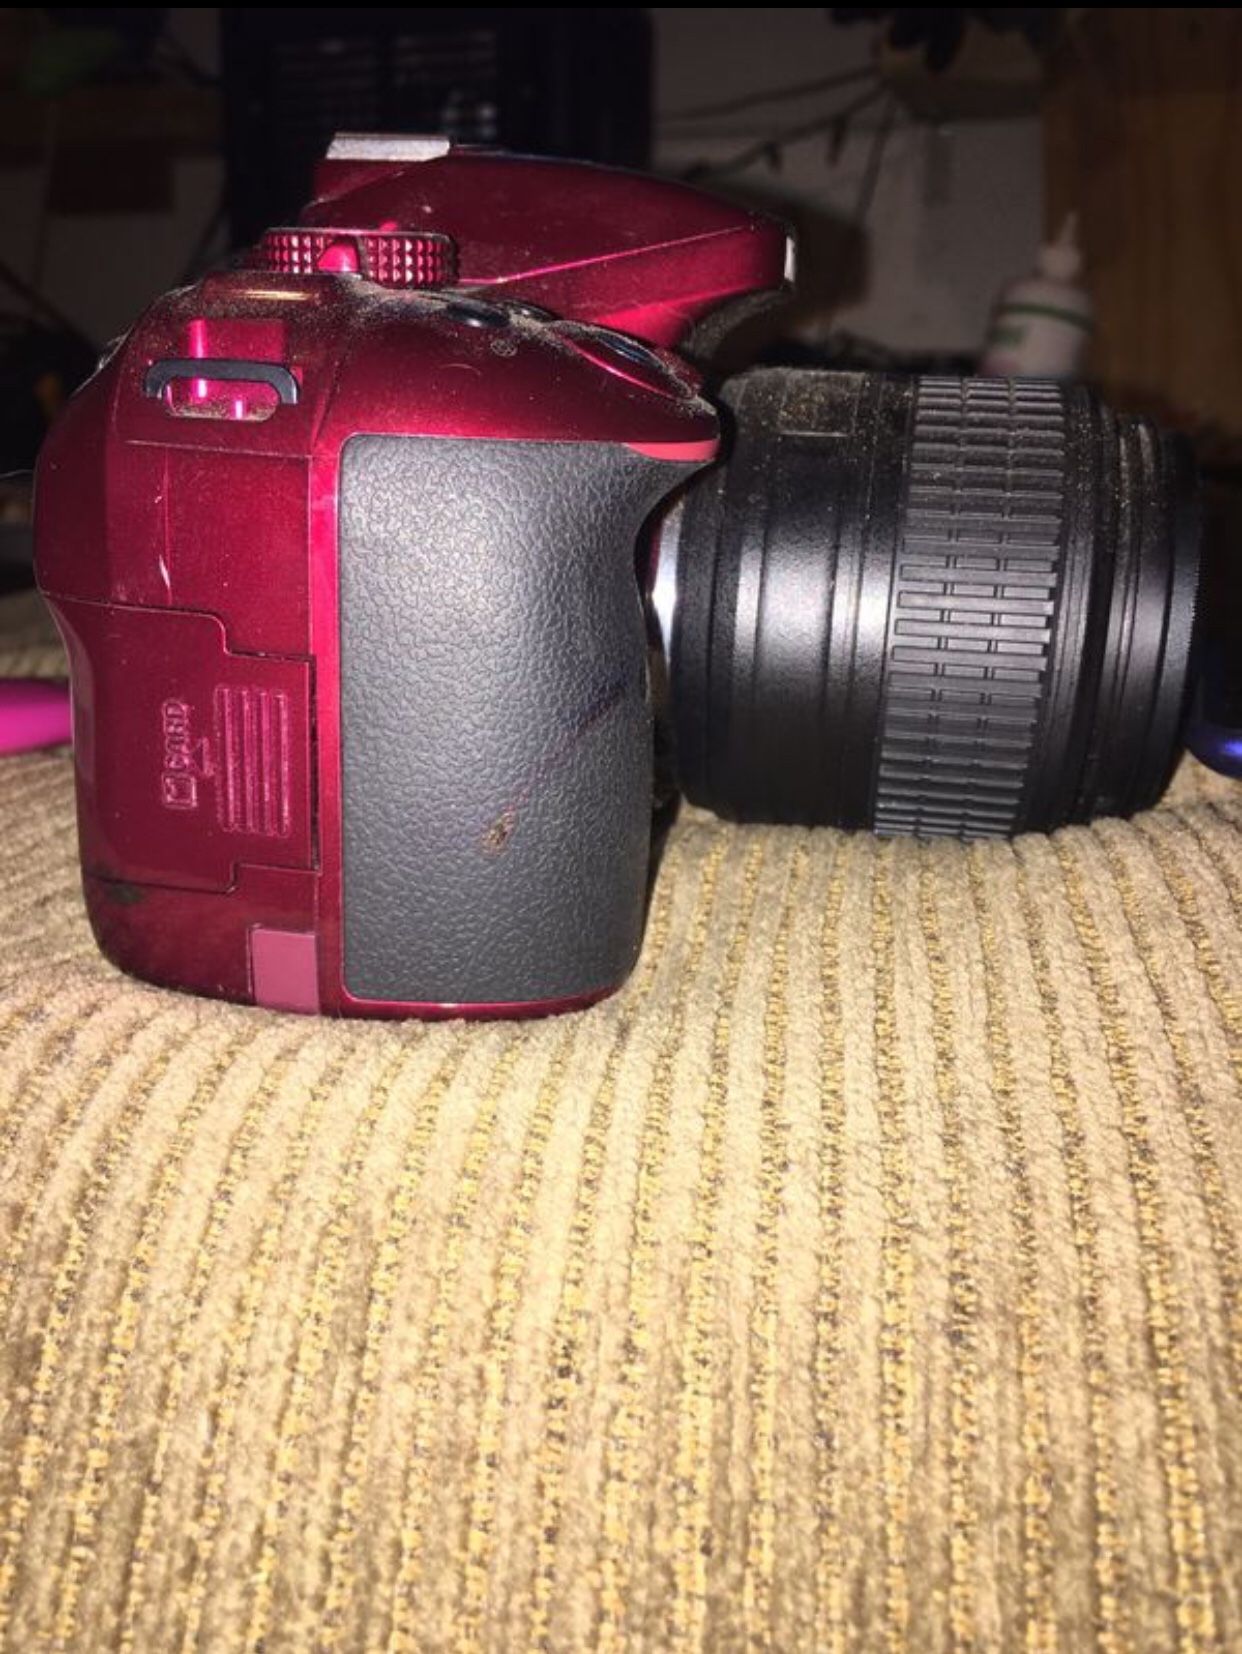 Nikon D5300 with 18mm-55mm lense